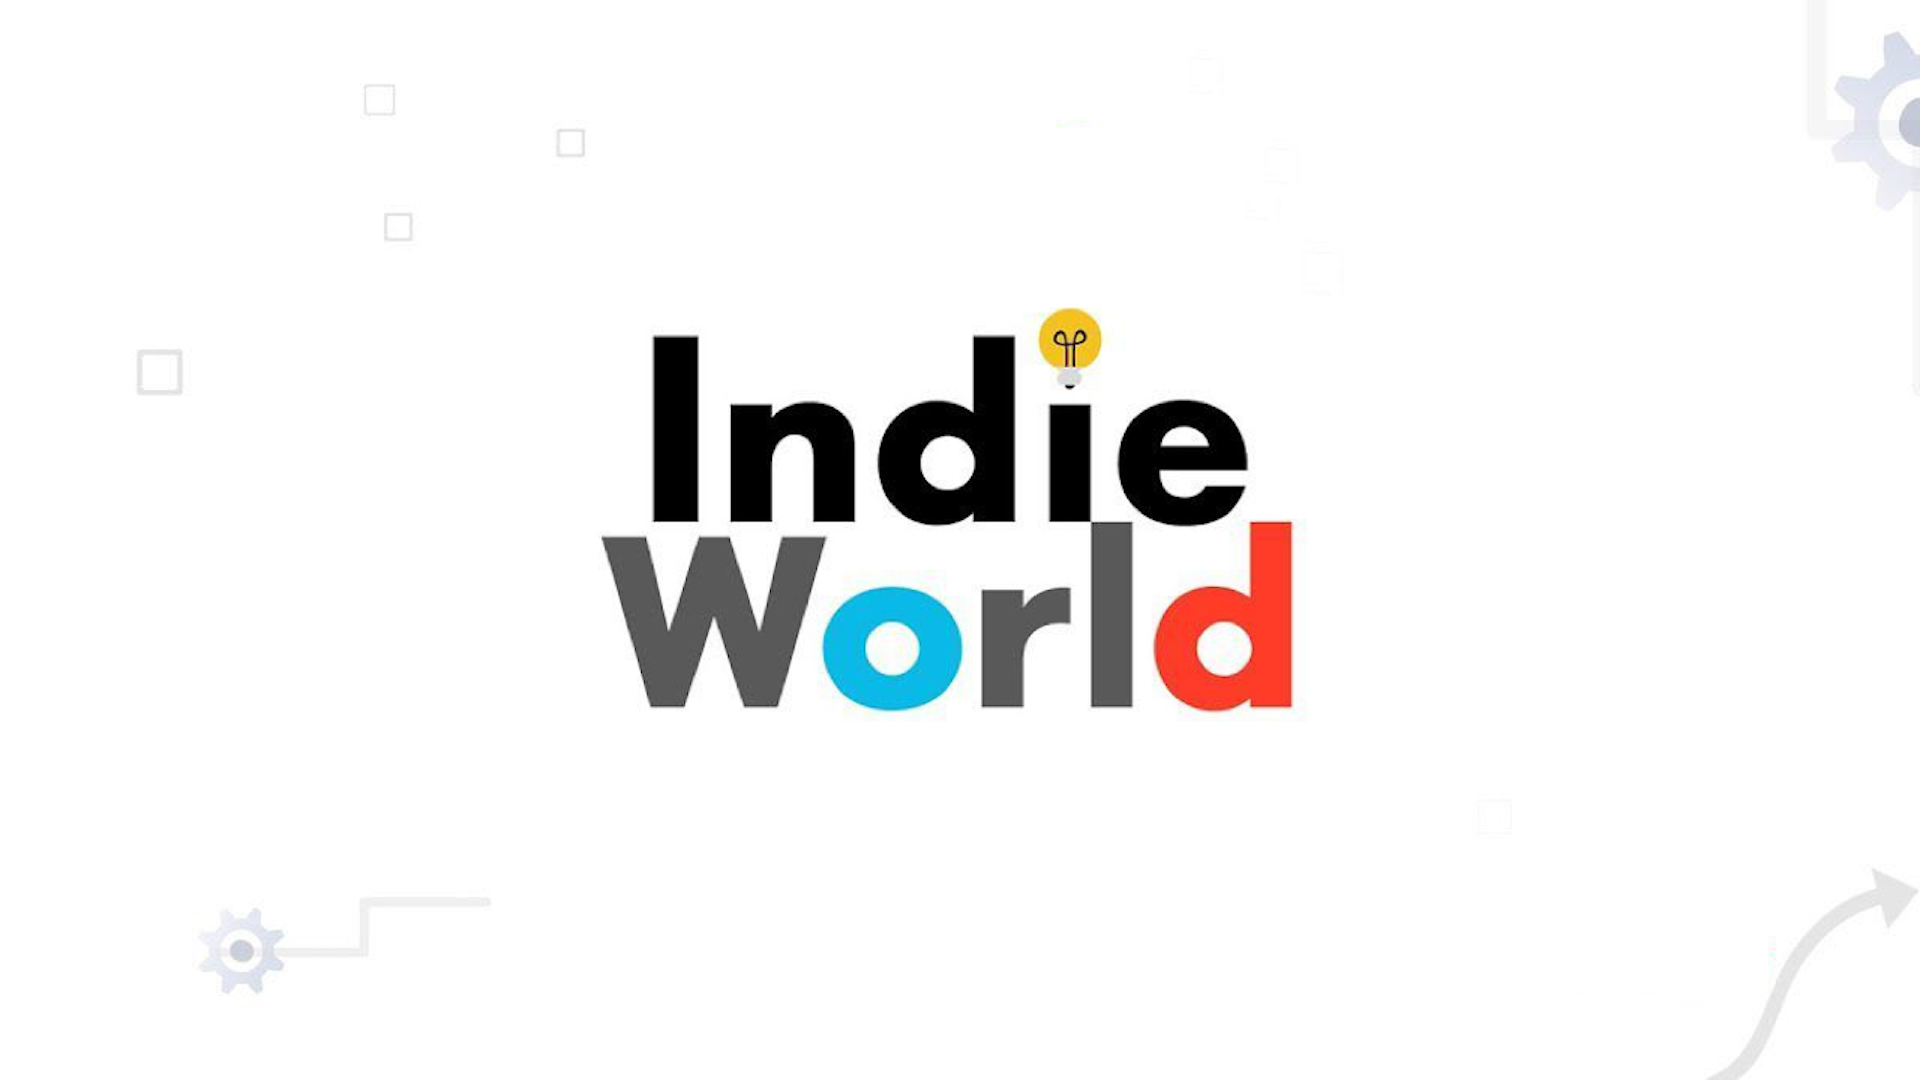 I-Nintendo Indie World